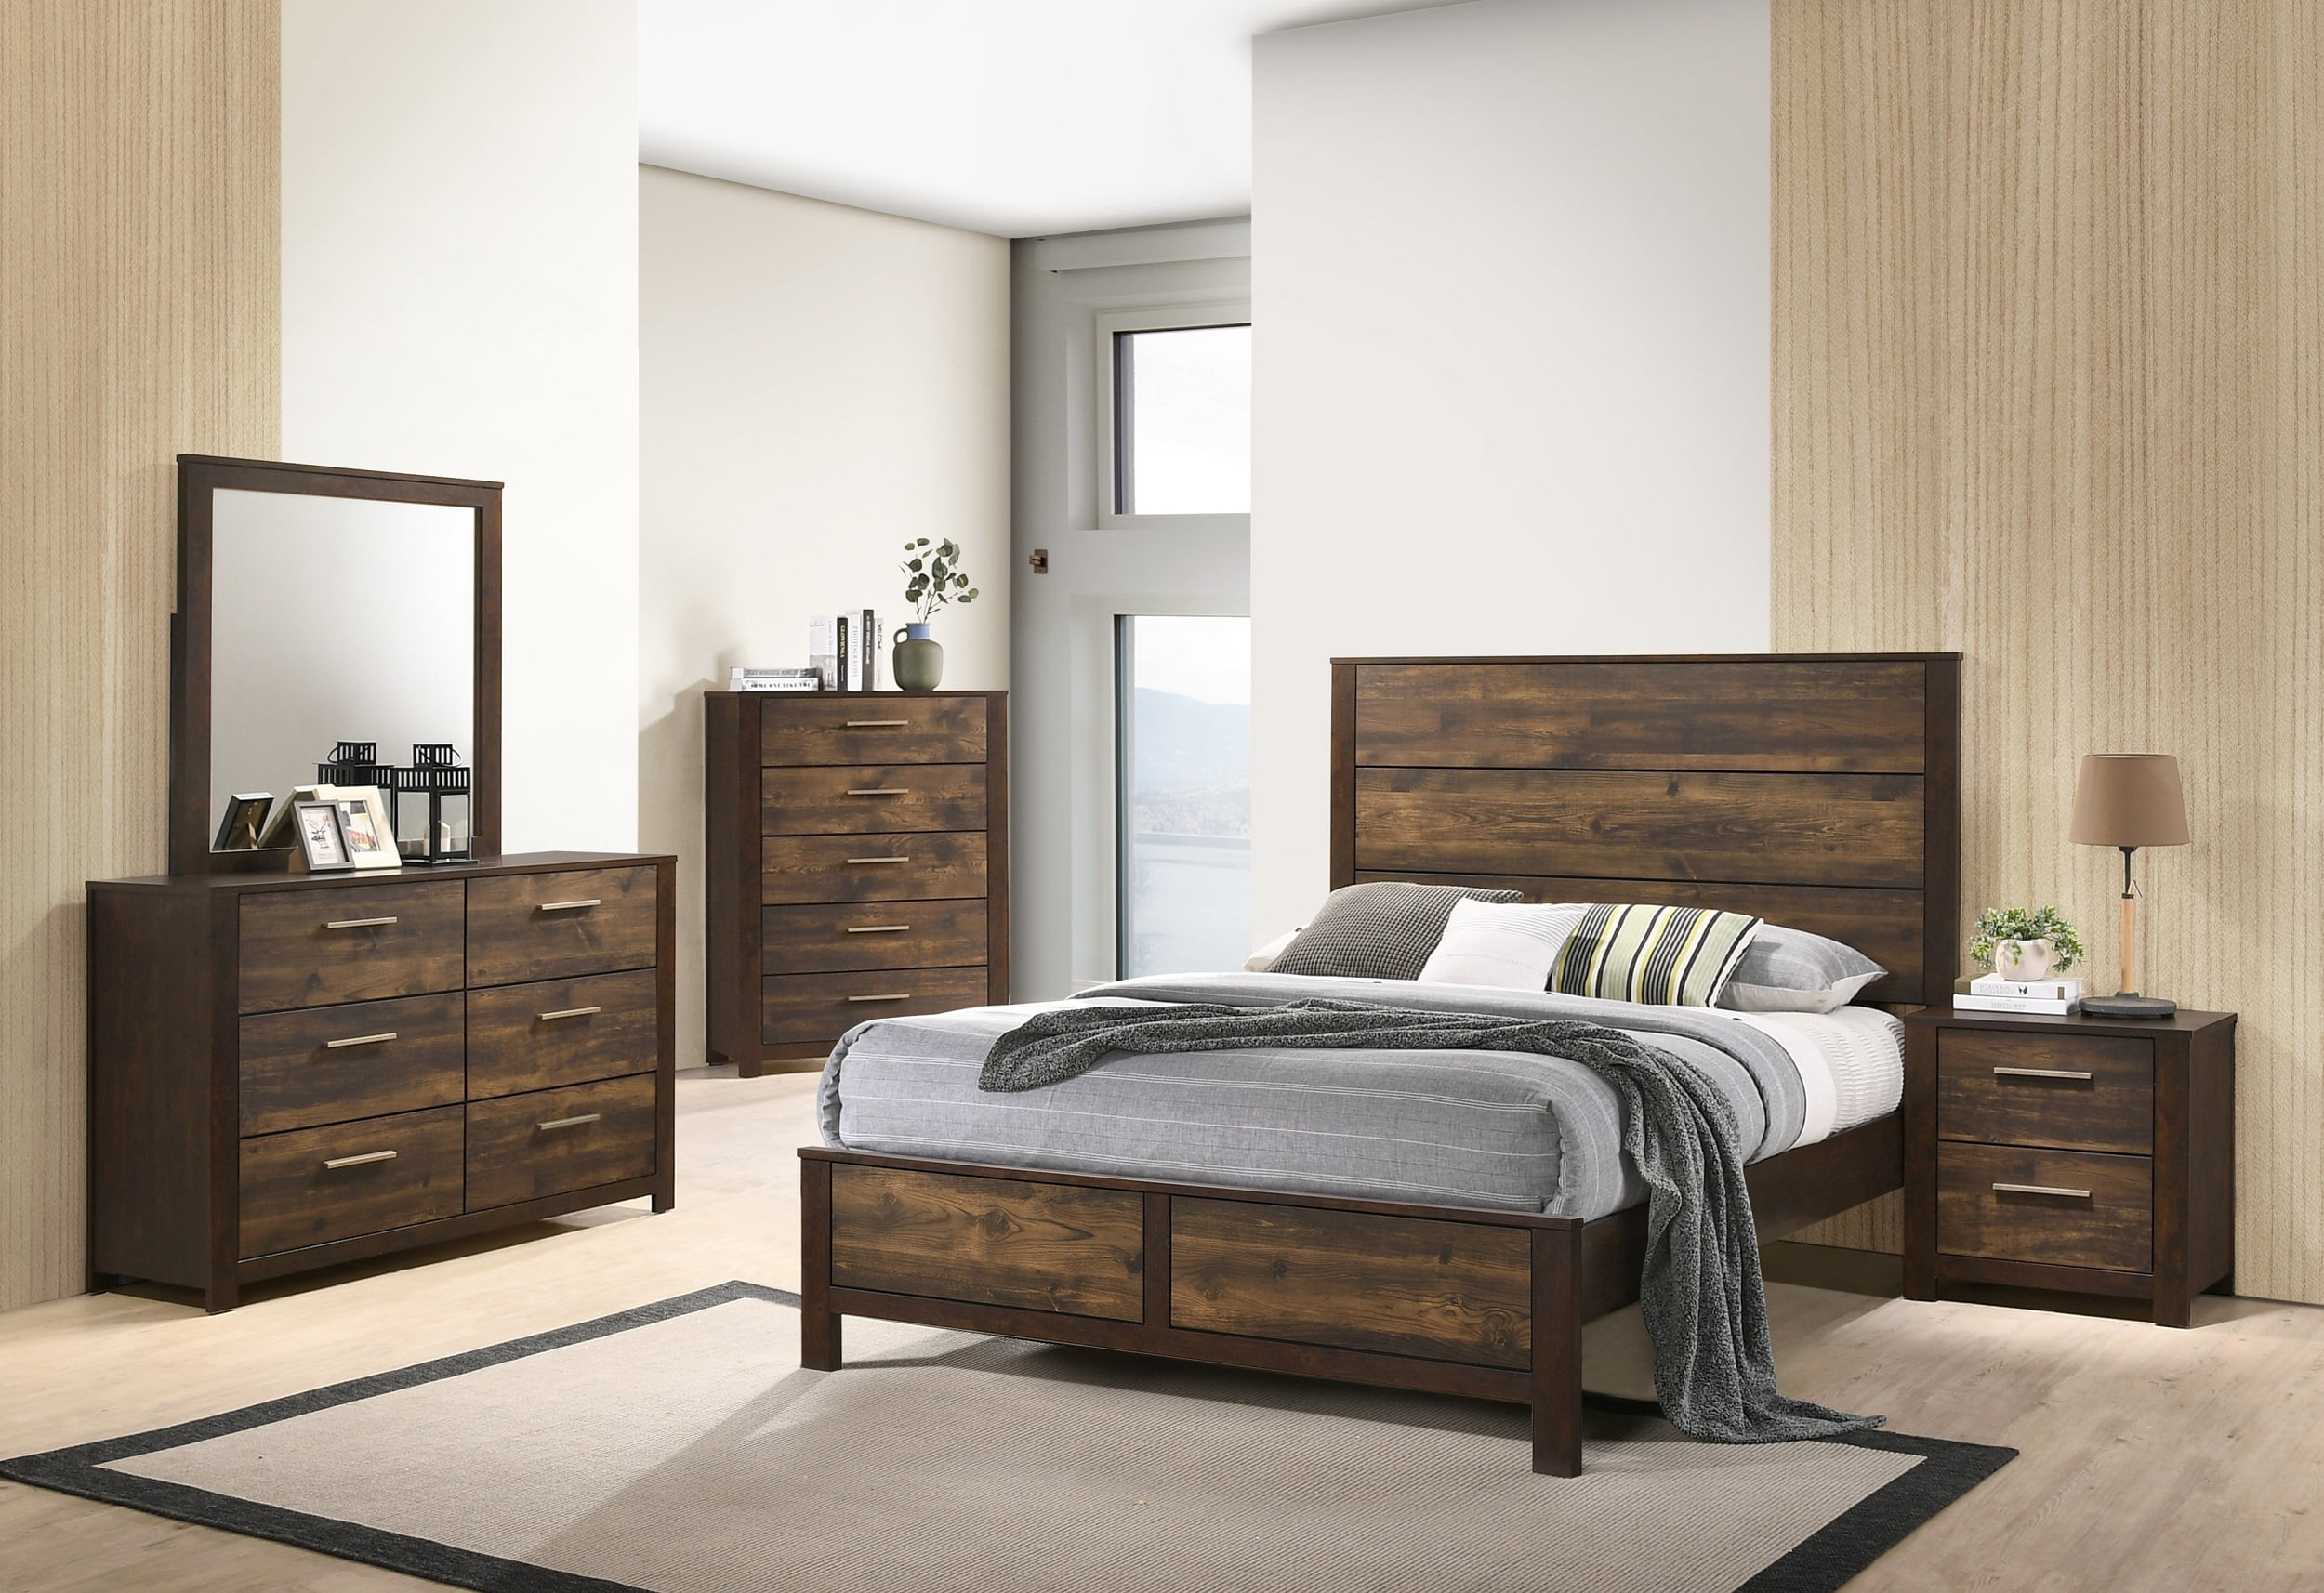 sayler walmart bedroom furniture set